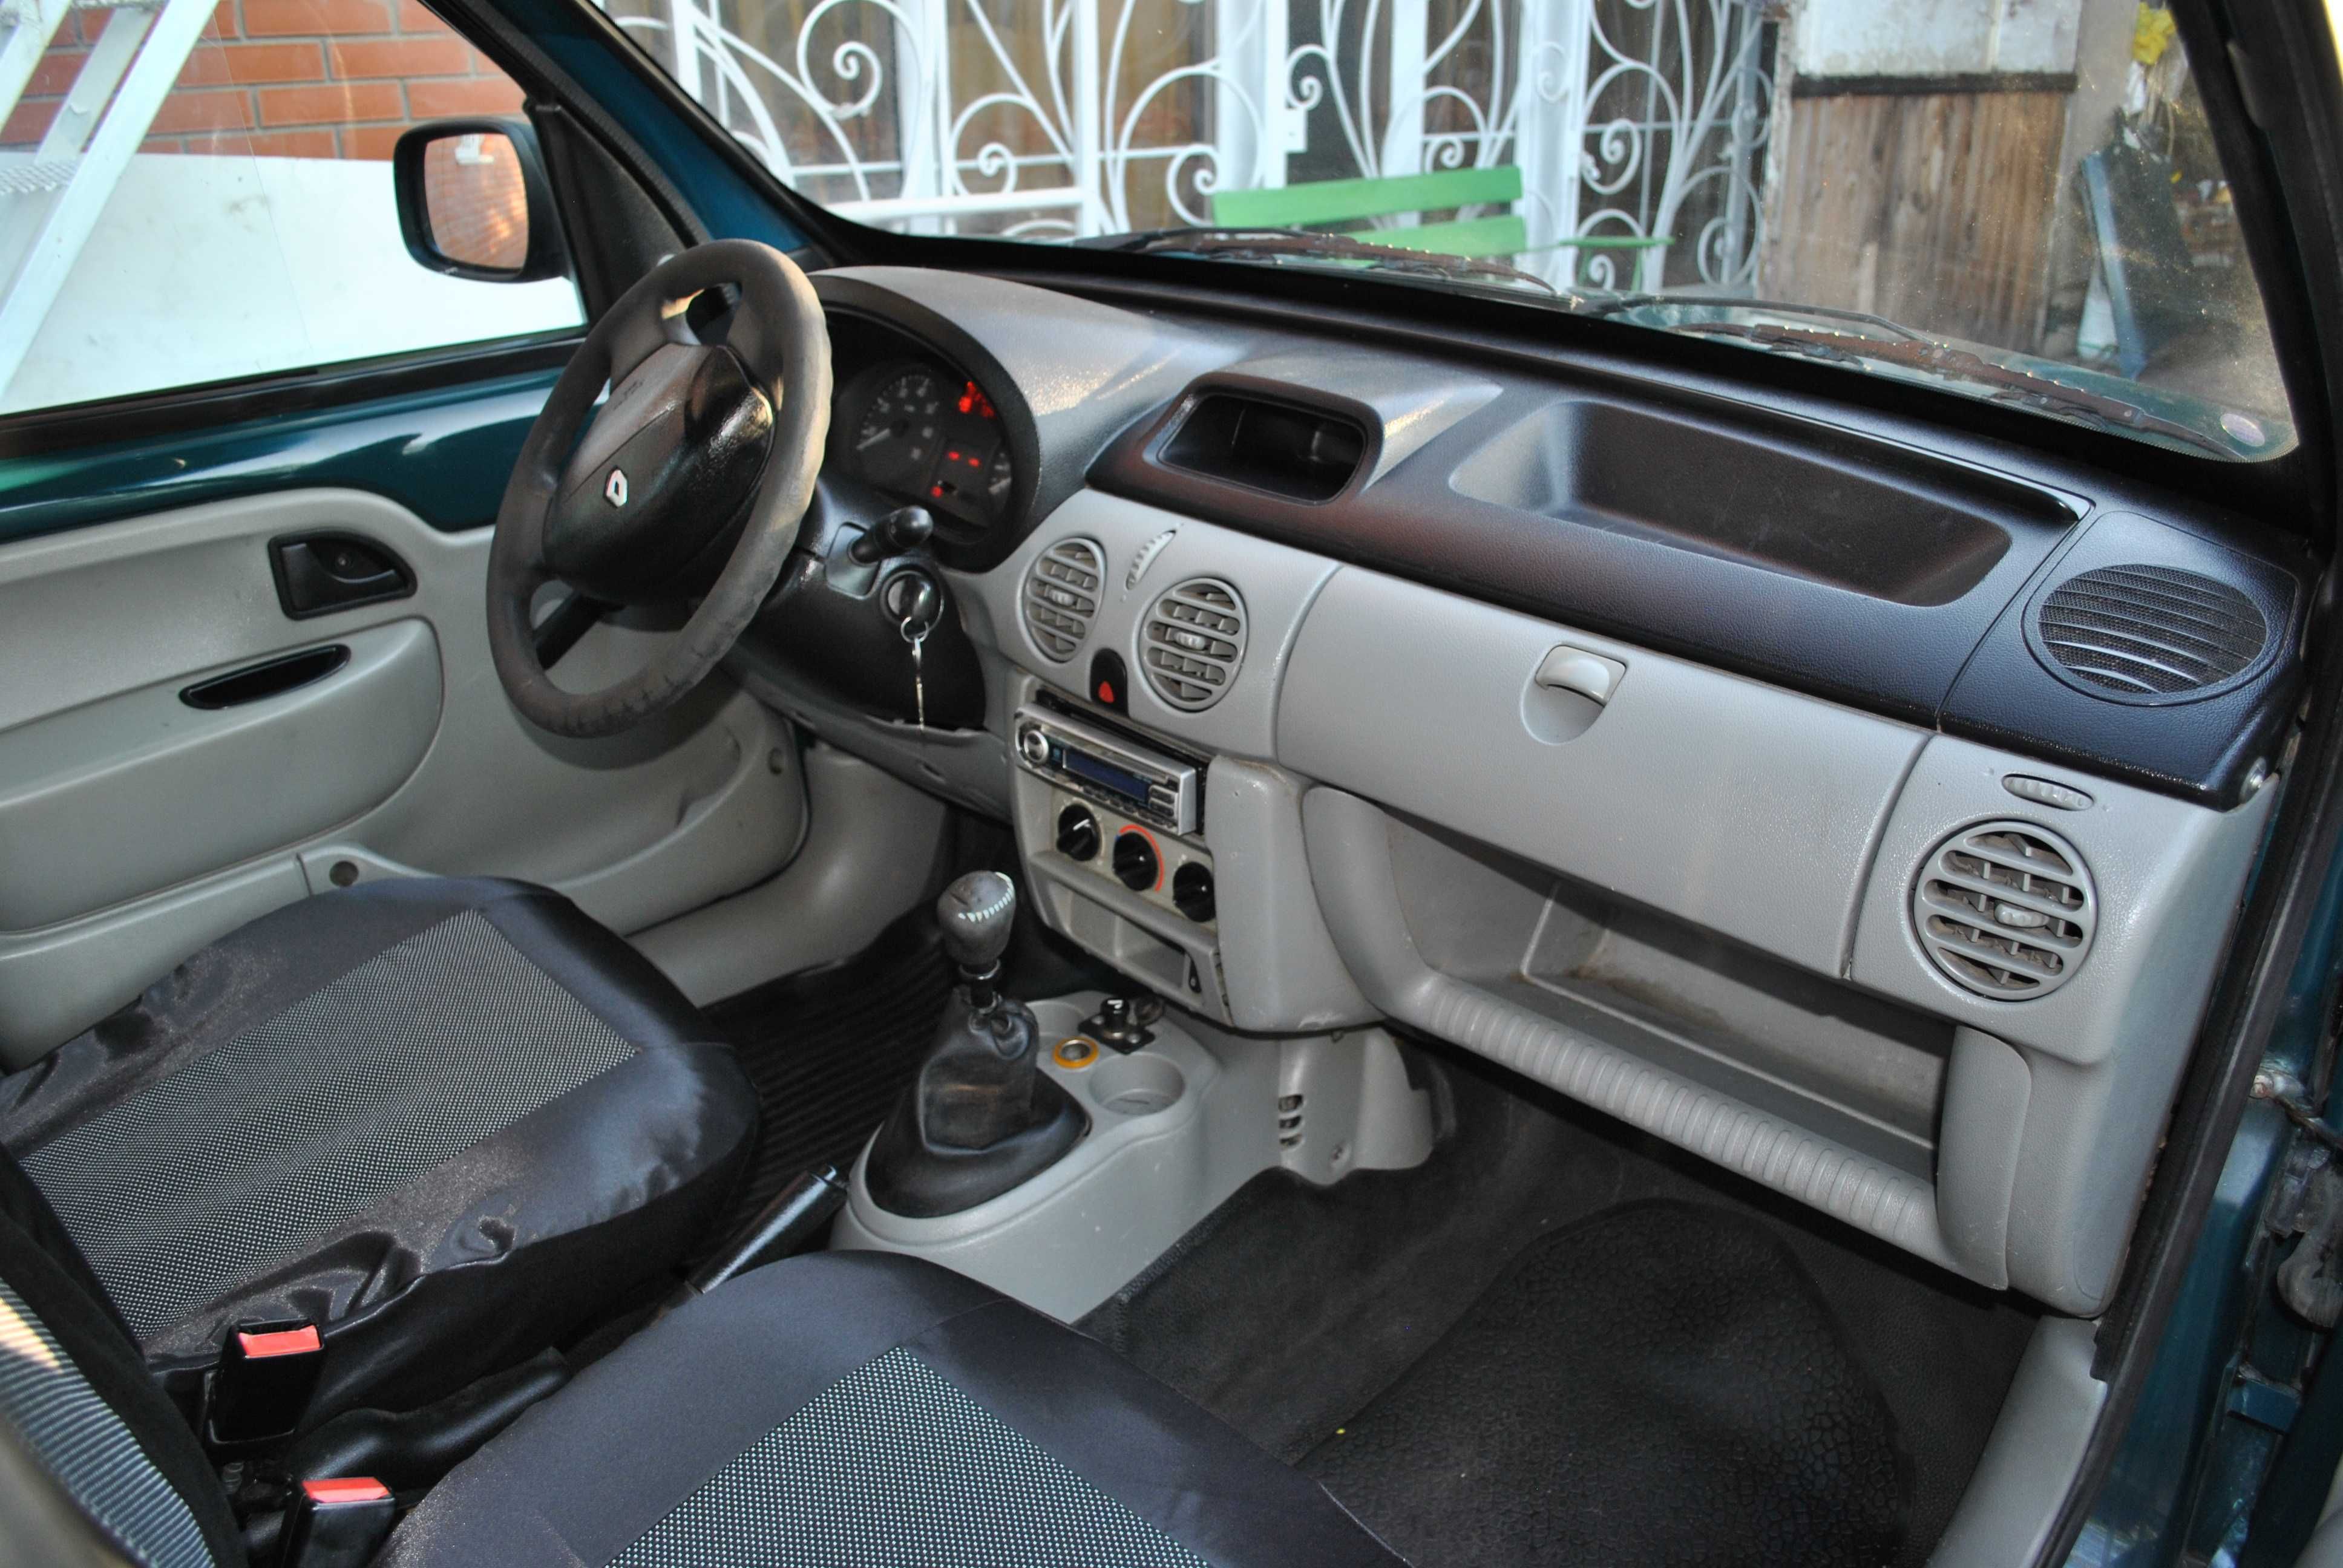 Renault Kengoo Passenger 2005 1,4 бензин у дуже гарному робочому стані